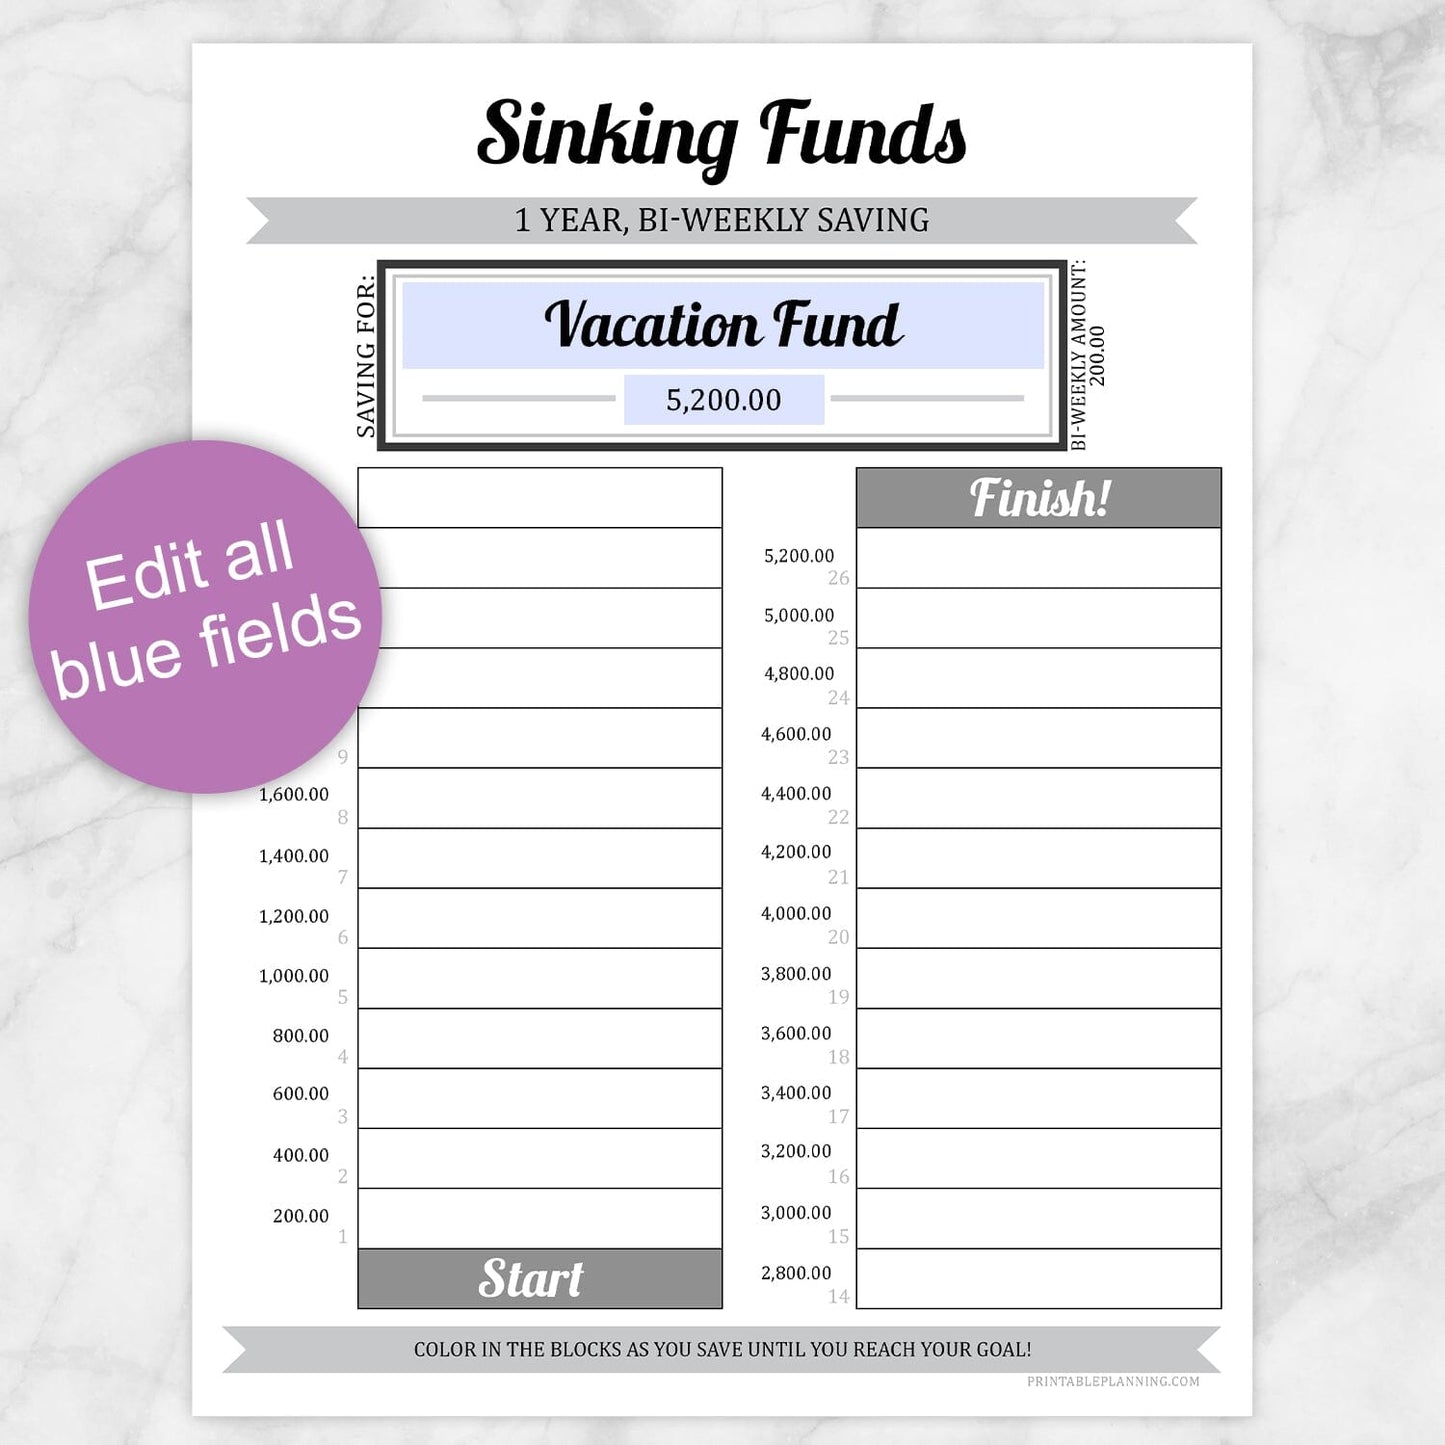 Printable Sinking Funds Savings Chart, 1 Year Bi-Weekly at Printable Planning. Edit all blue fields.